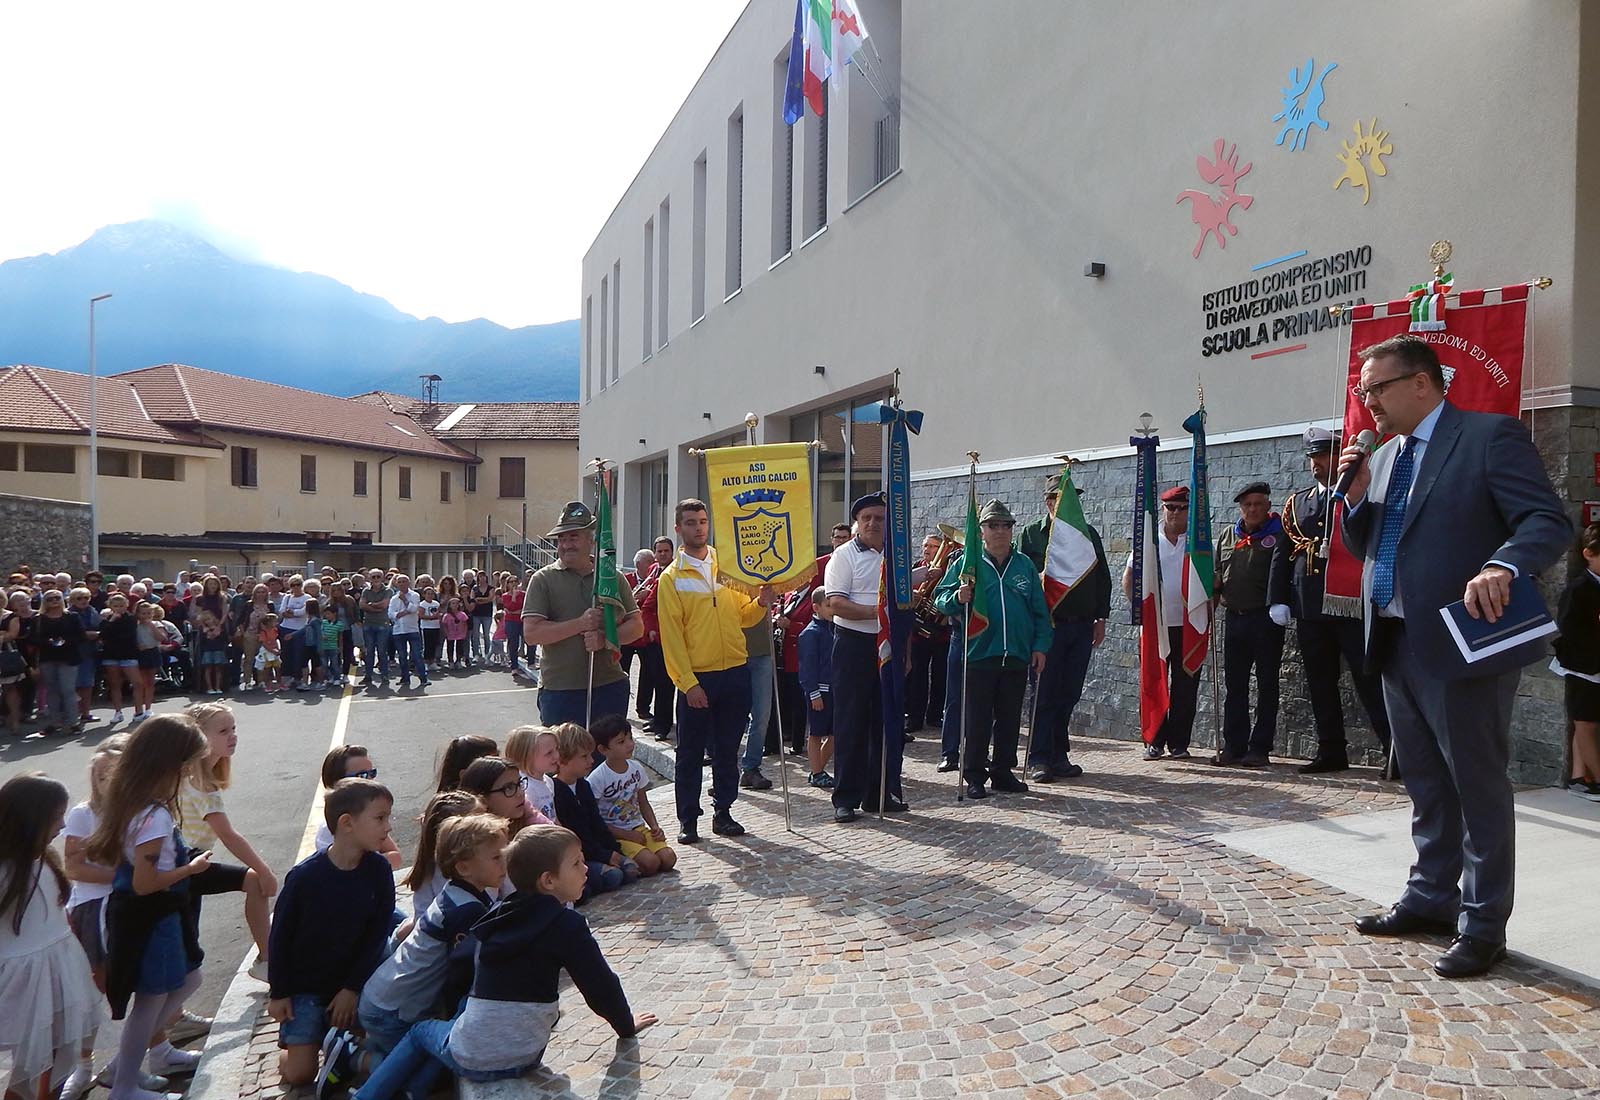 Primary school in Gravedona - The inauguration of the school